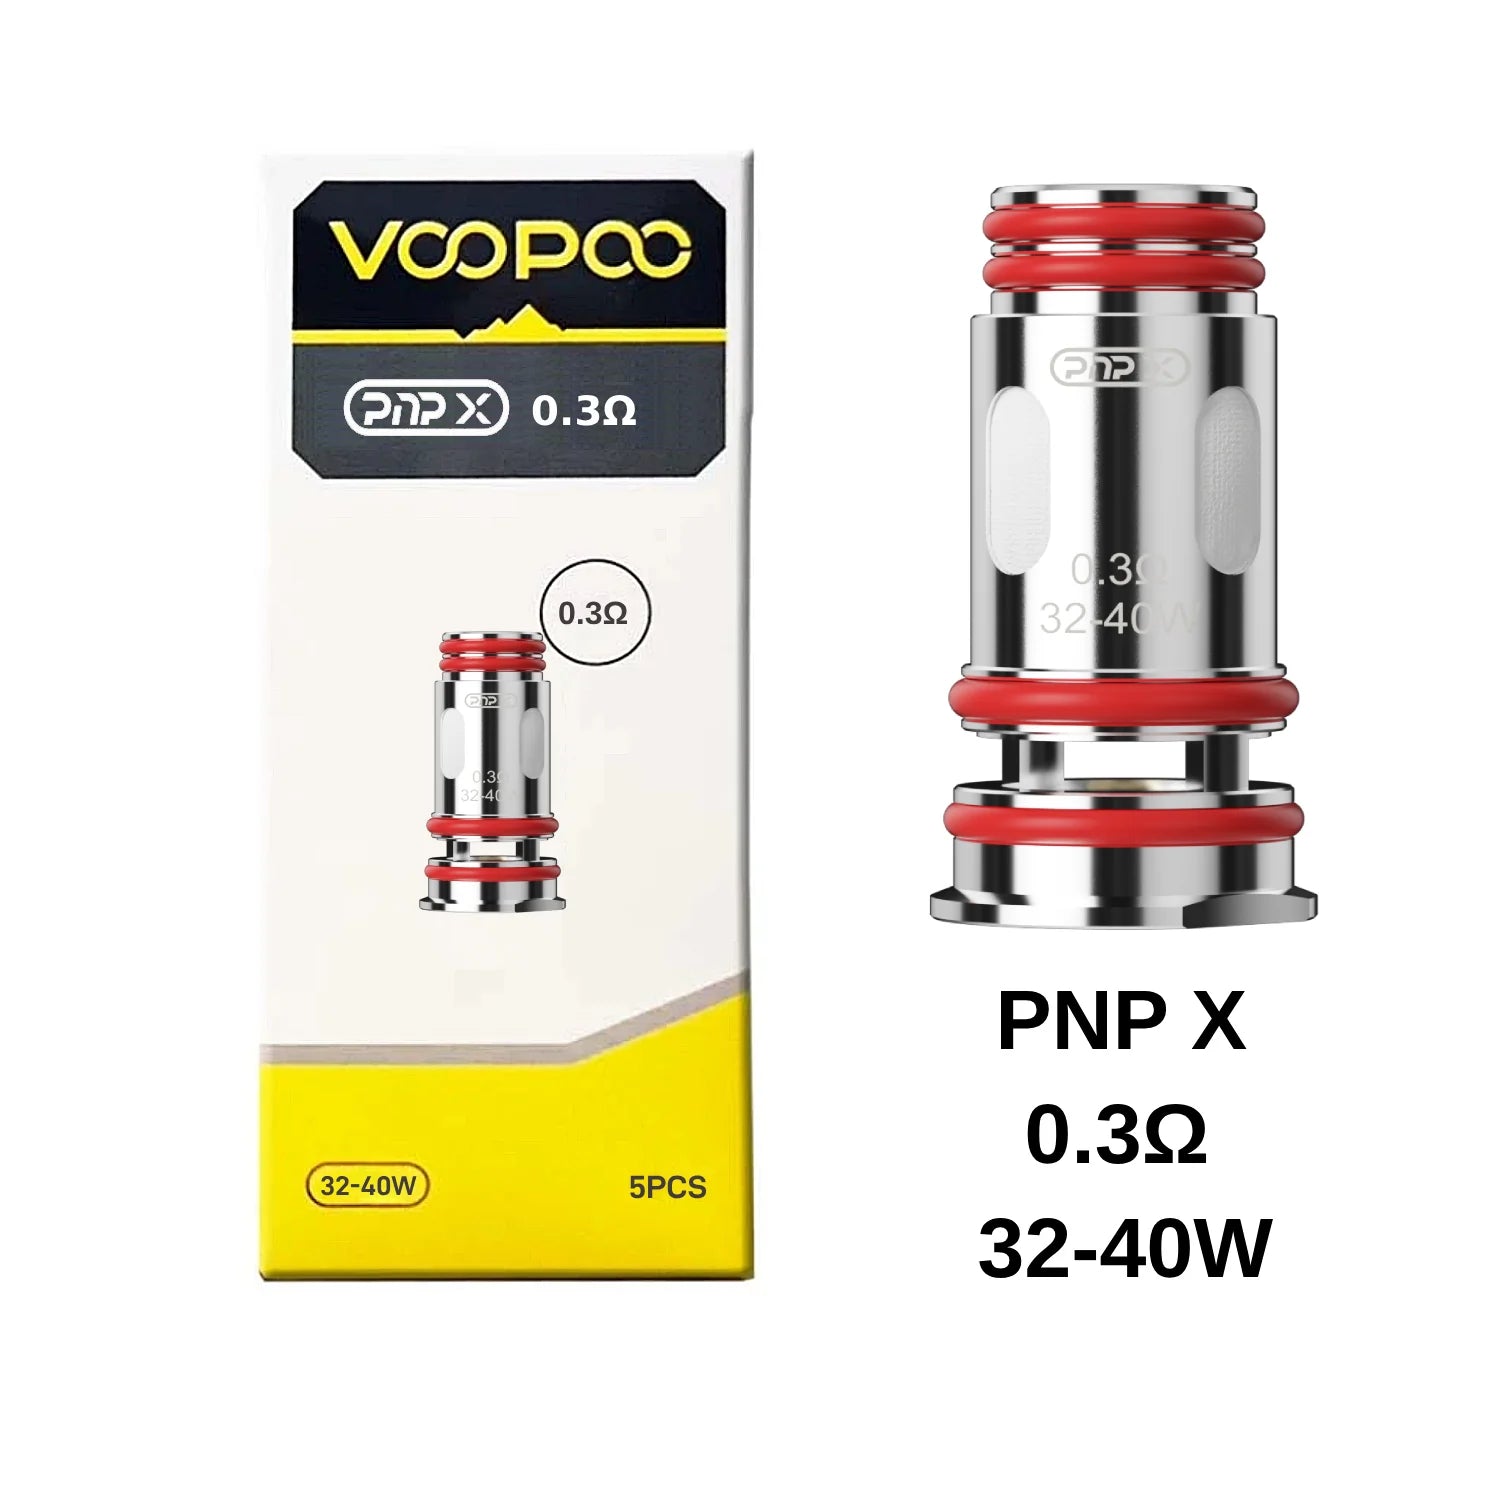 VOOPOO PNP X 0.3 COILS (5PCS)